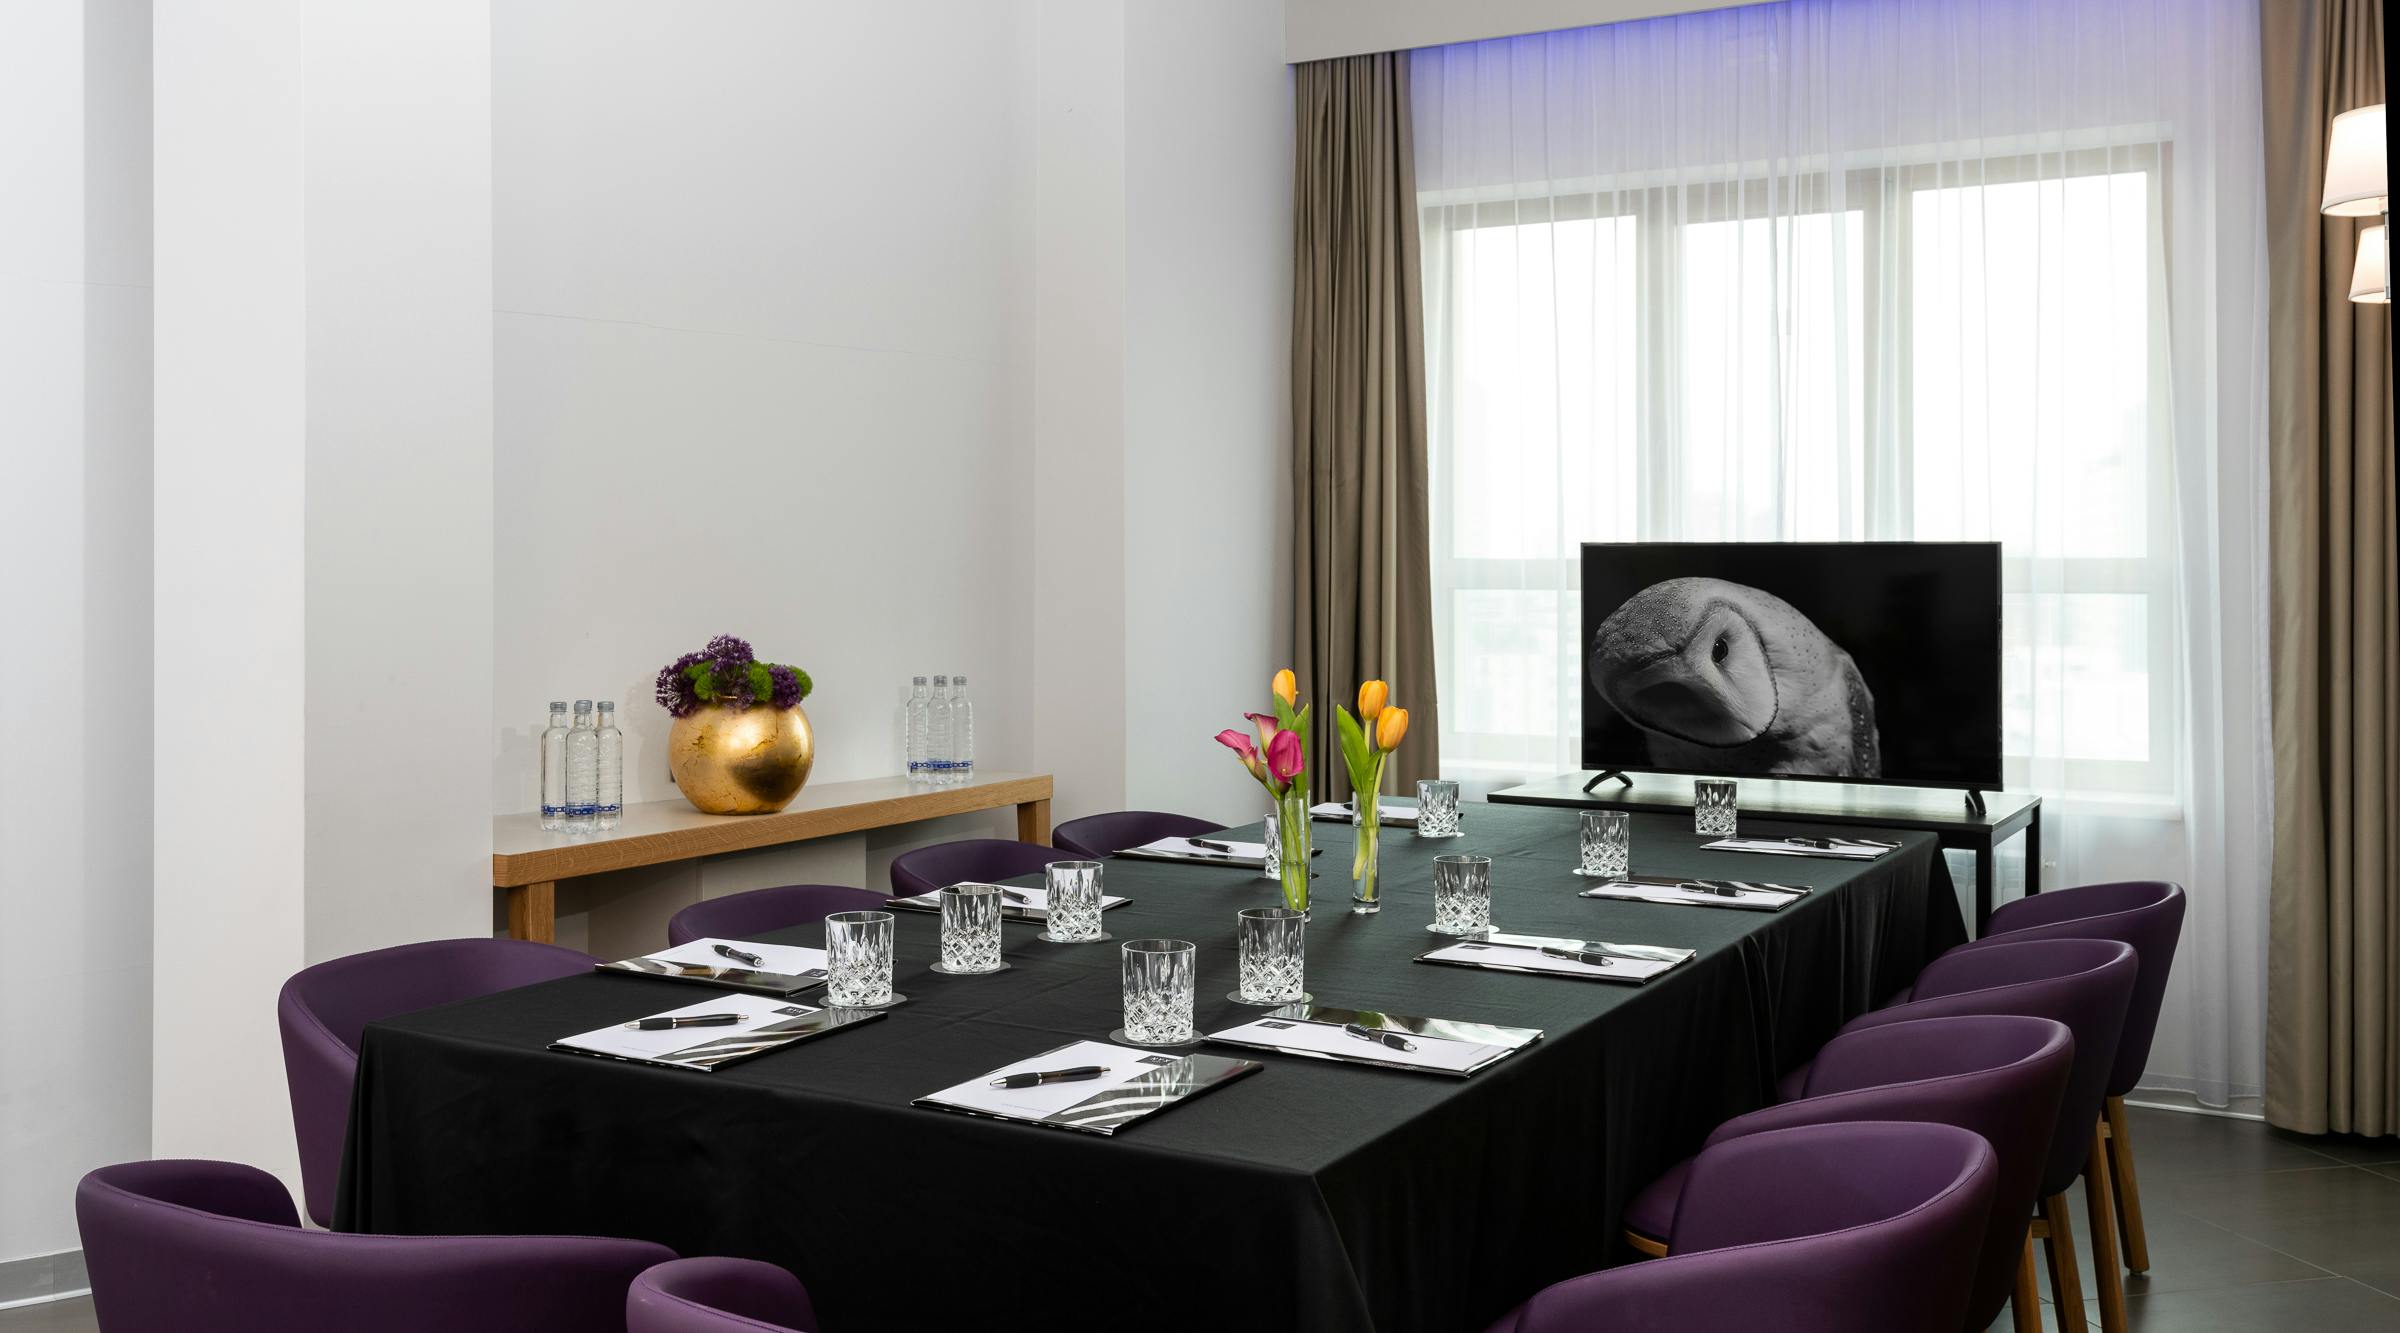 Sala meeting con sedie viola e tavolo nero